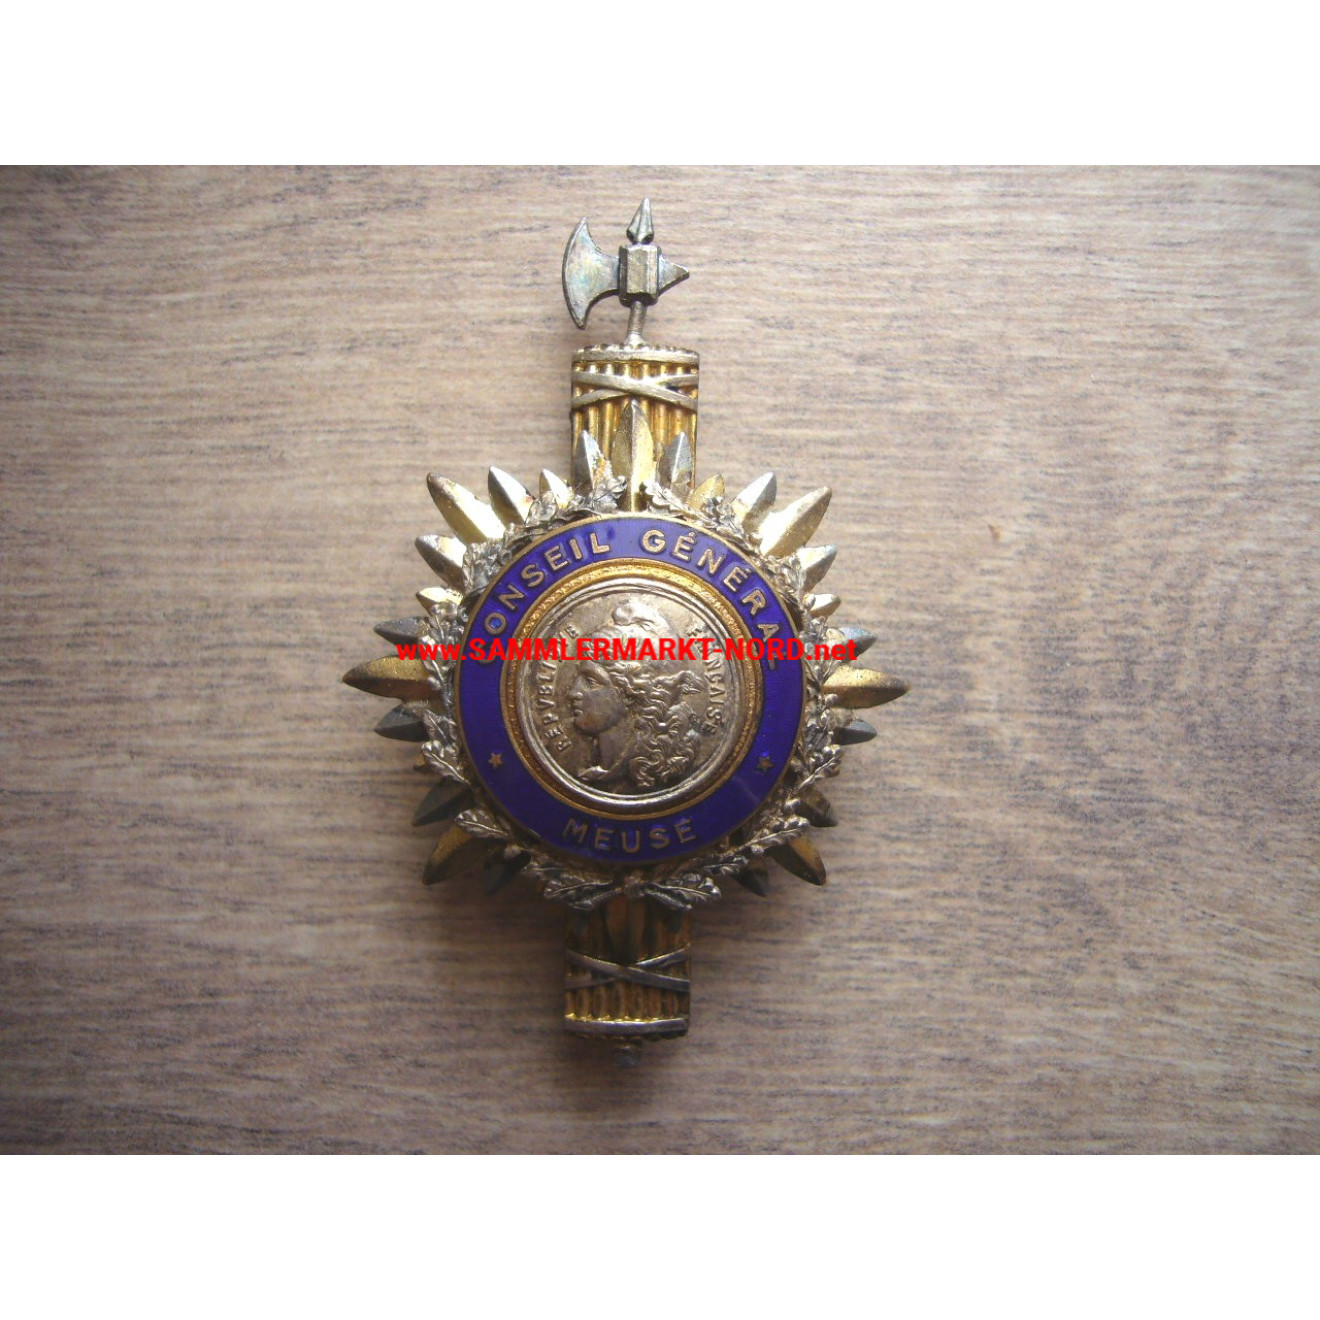 France - Conseil General Meuse - badge